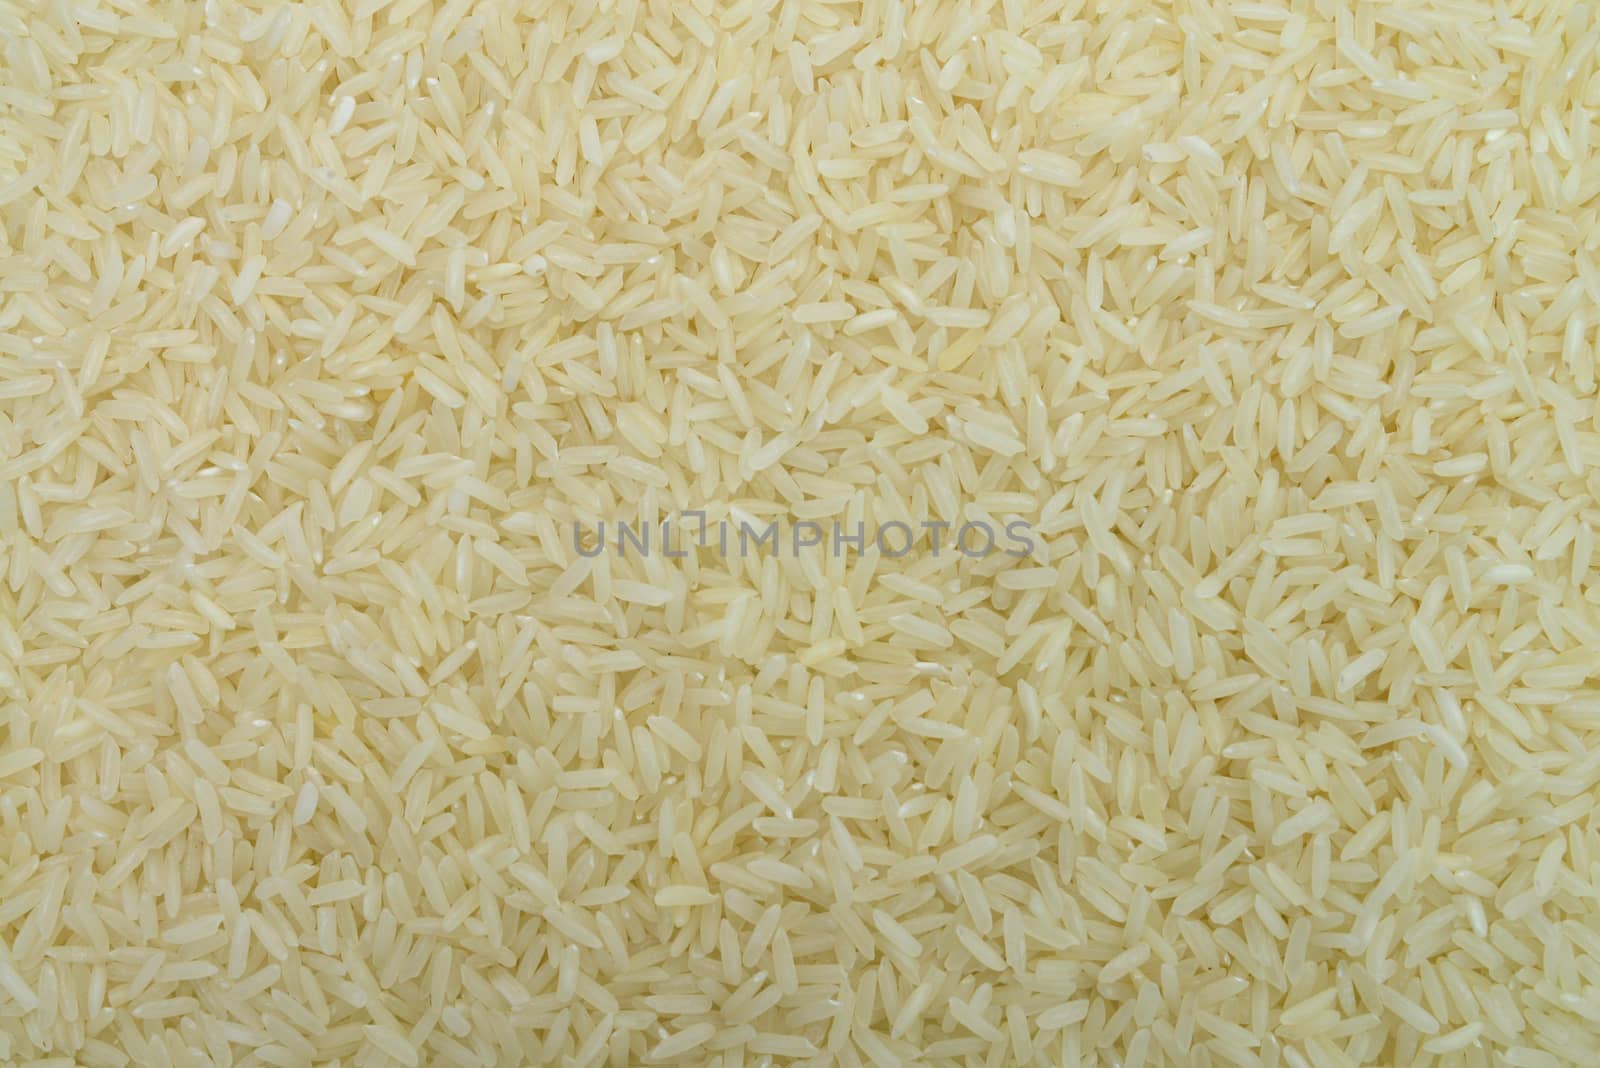 rice texture background by tony4urban